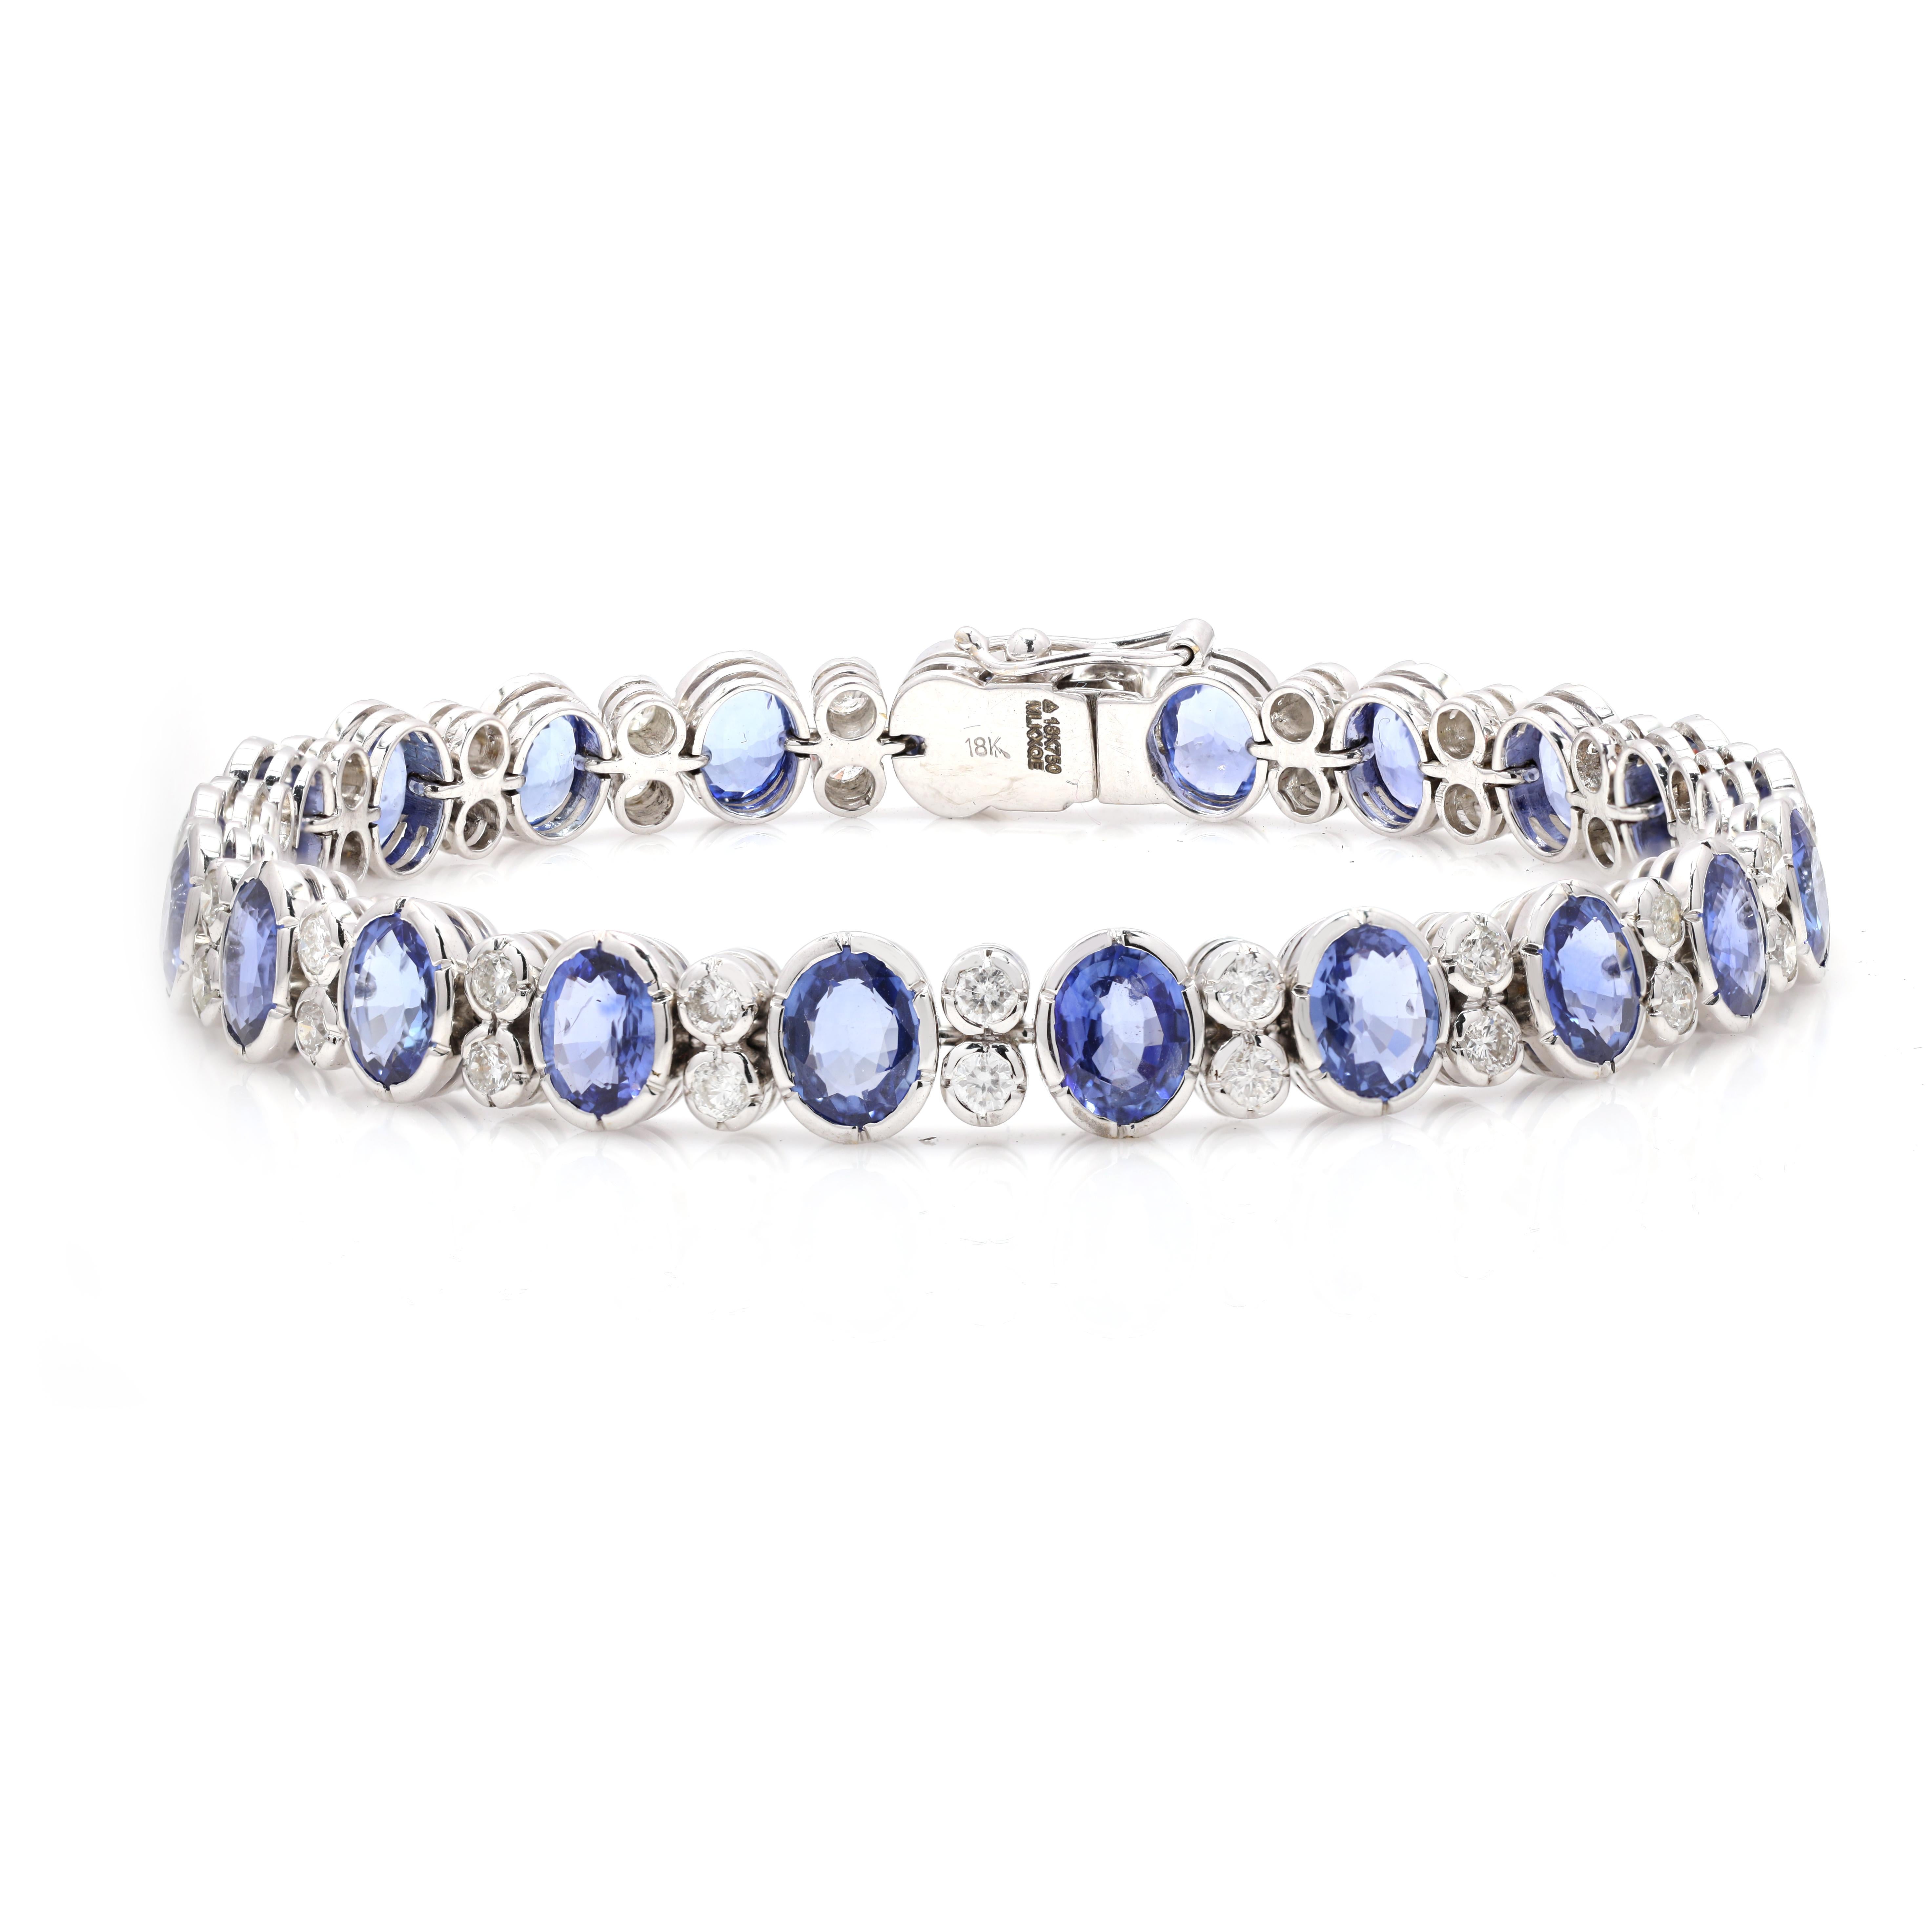 Oval Cut 15.45 Carat Blue Sapphire Wedding Bracelet with Diamonds Inset 18K White Gold For Sale